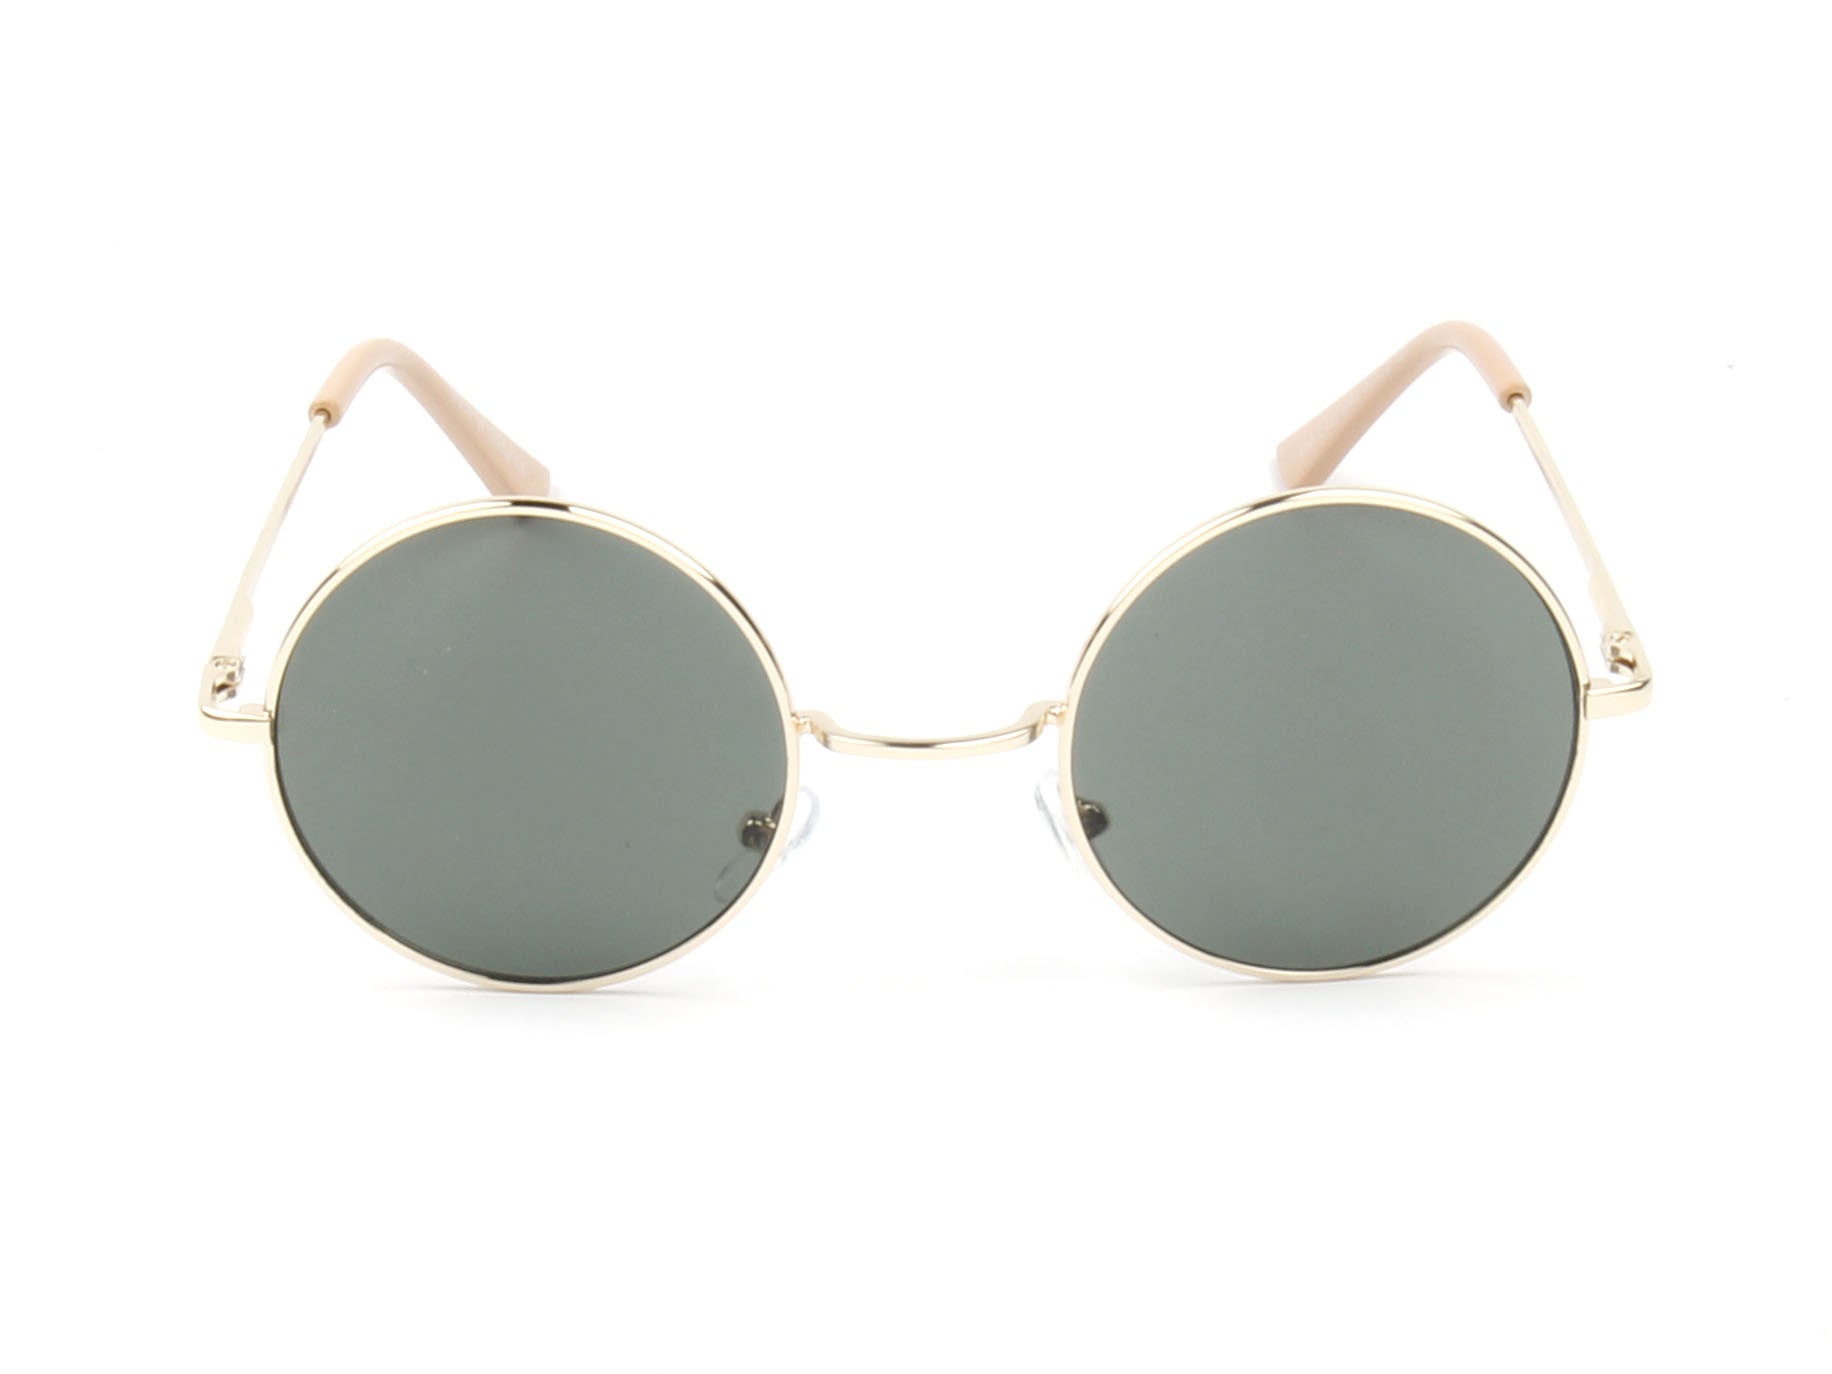 E10 - Retro Lennon-Inspired Circle Round Sunglasses Assorted/Mixed